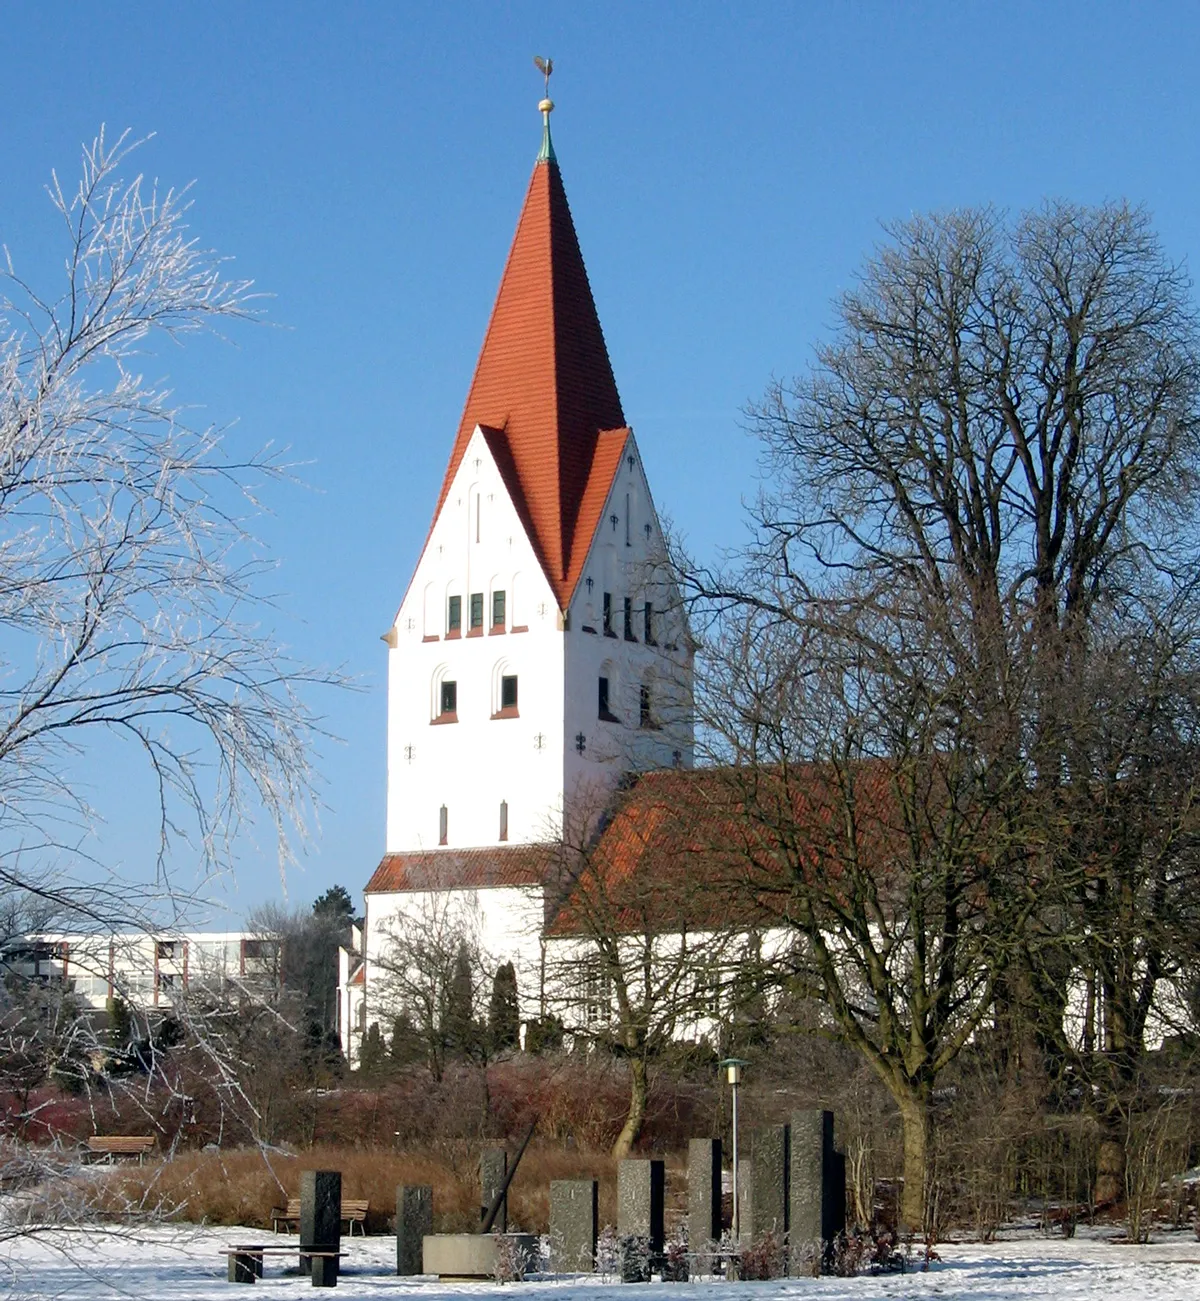 Photo showing: Gammel Haderslev Church in Haderslev Denmark

Photo by author Jens Christensen